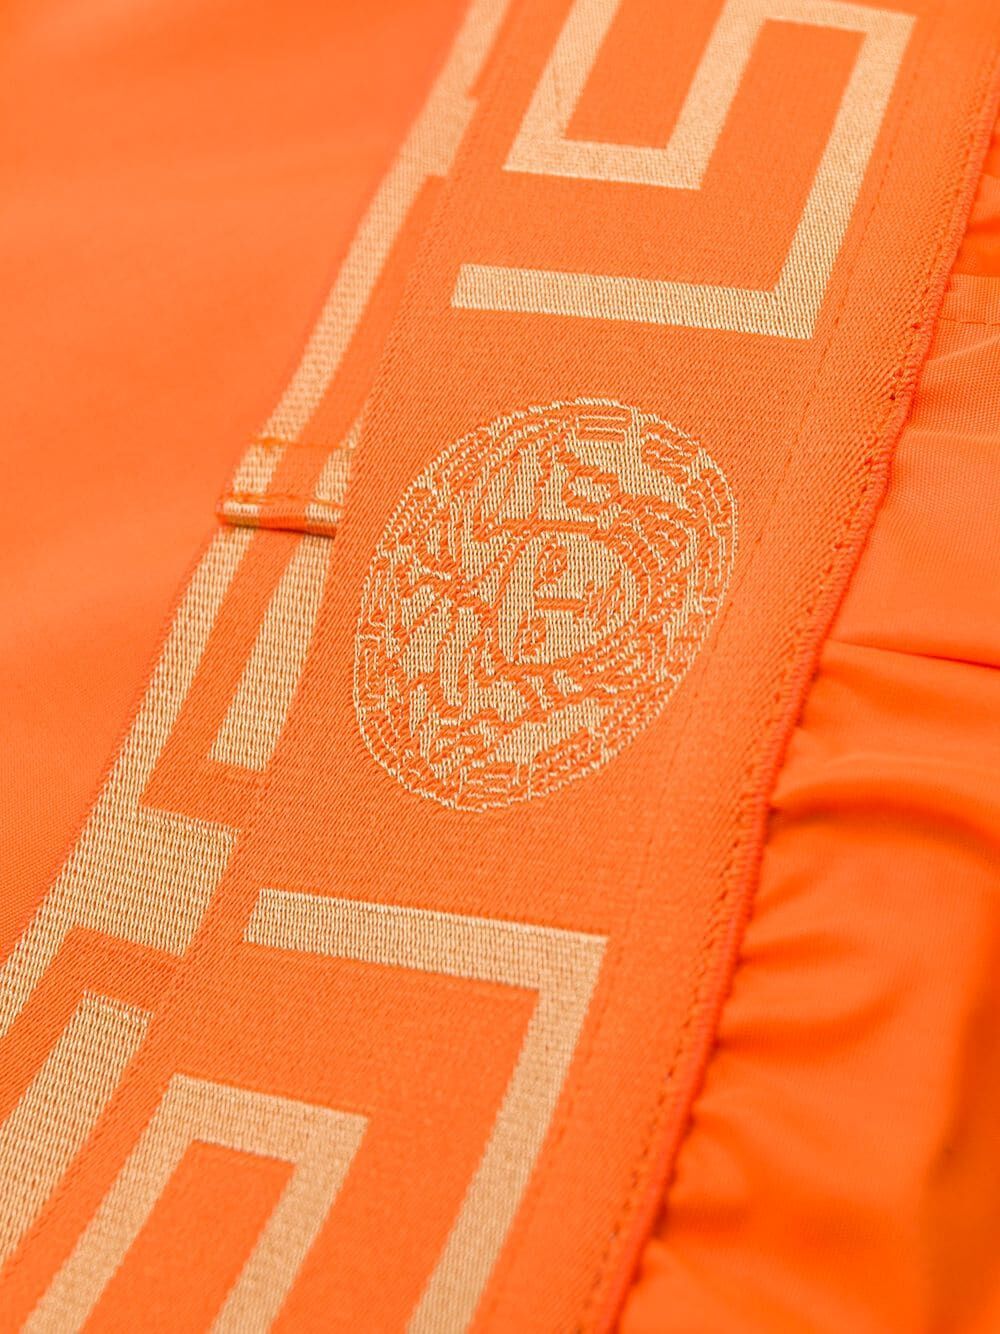 Shop Versace Swim Short Boxer Tessuto Poly Golfo Pd Taiana In Yellow & Orange